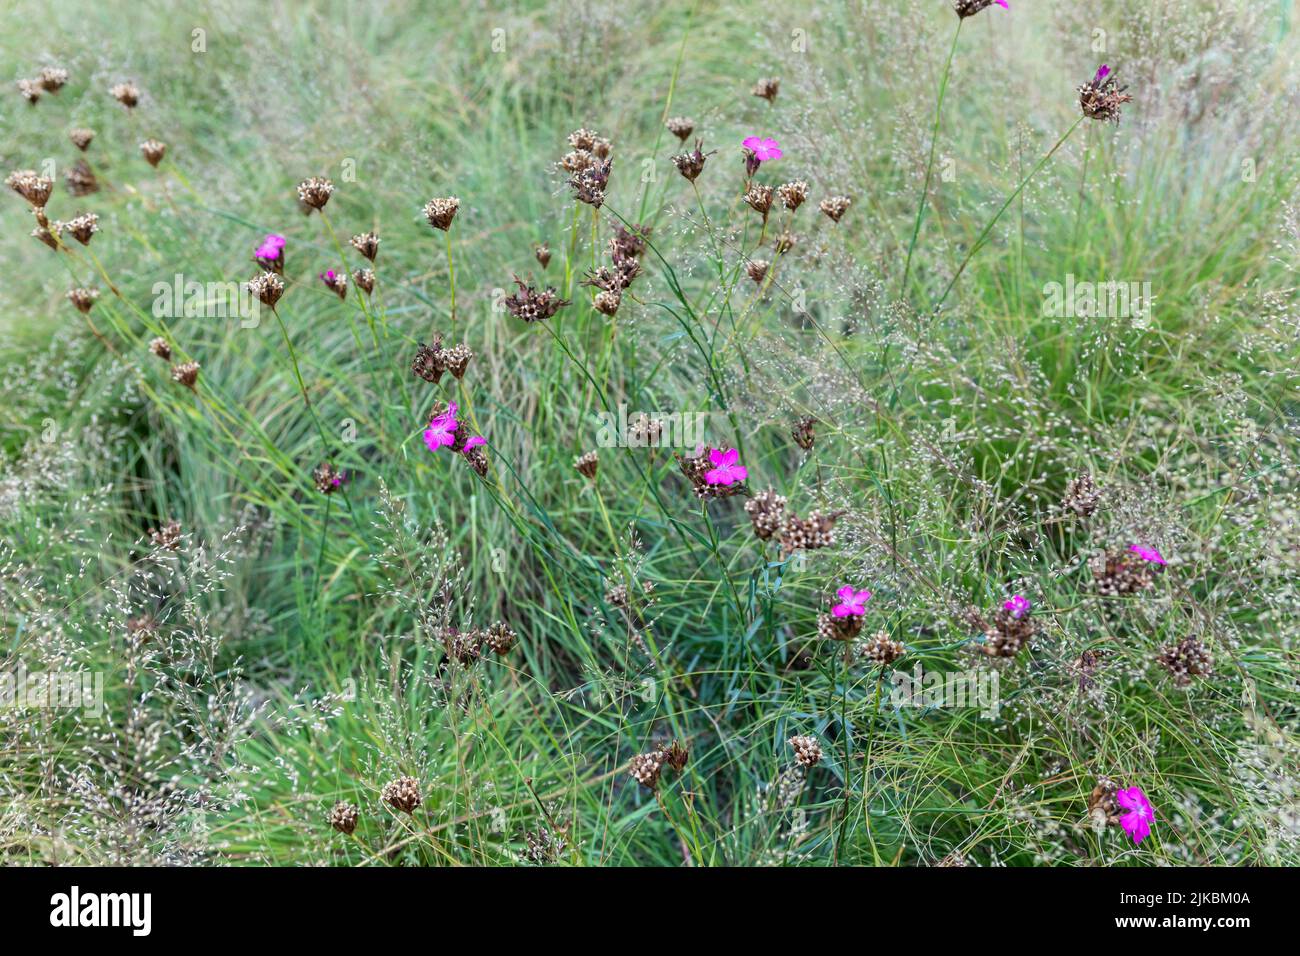 Dianthus carthusianorum (German pink) amongst grasses Stock Photo